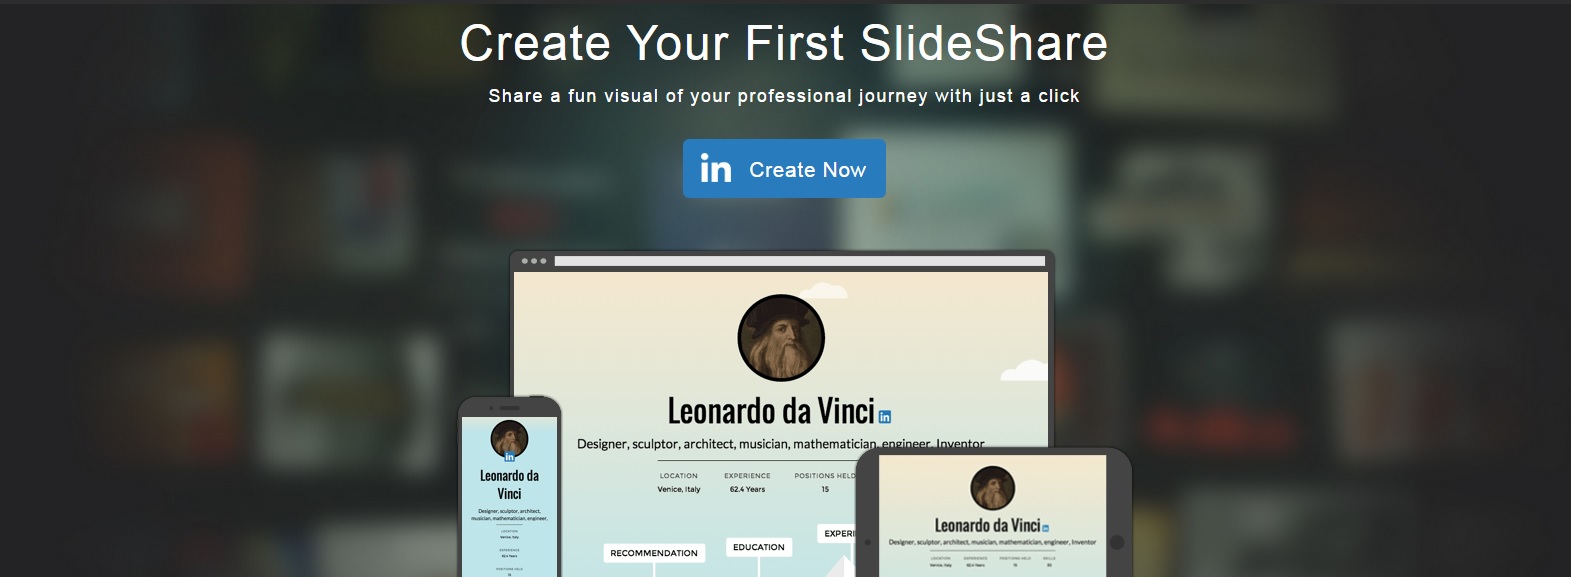 LinkedIn SlideShare Professional Journey